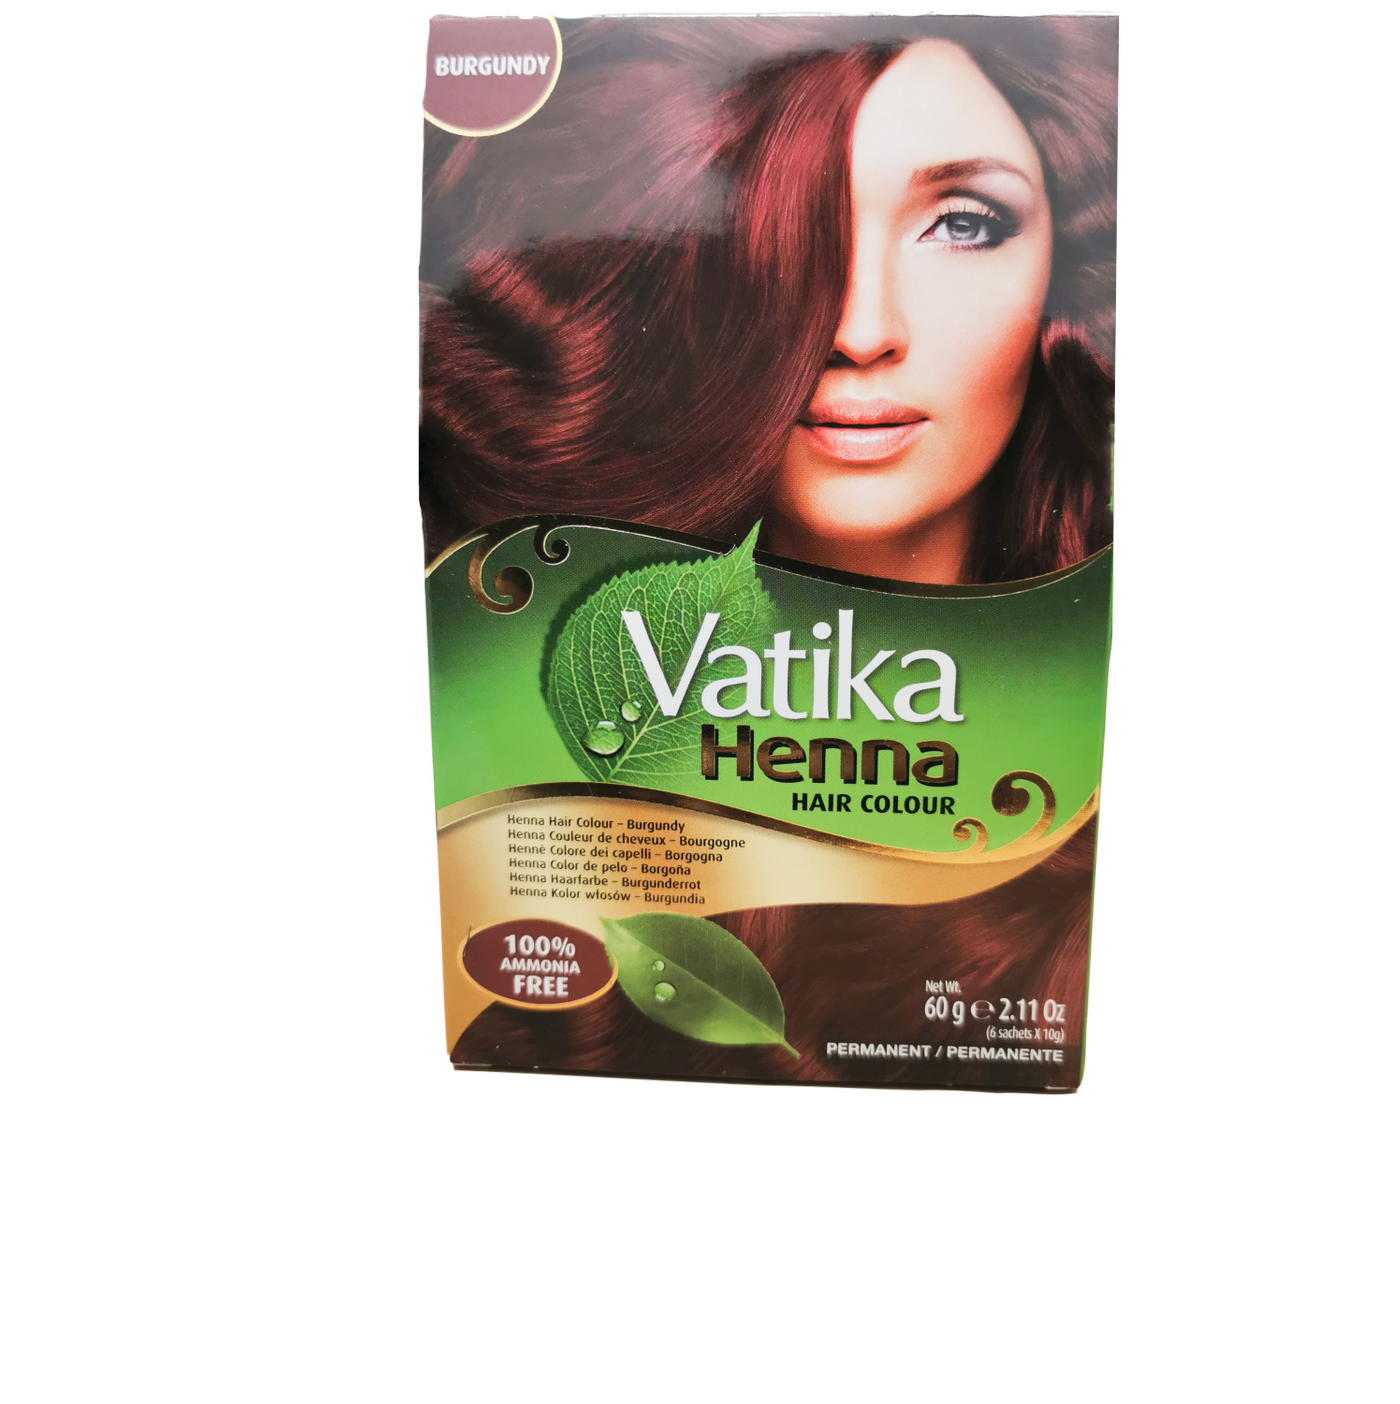 Vatika Henna Hair Colour (Burgundy) £